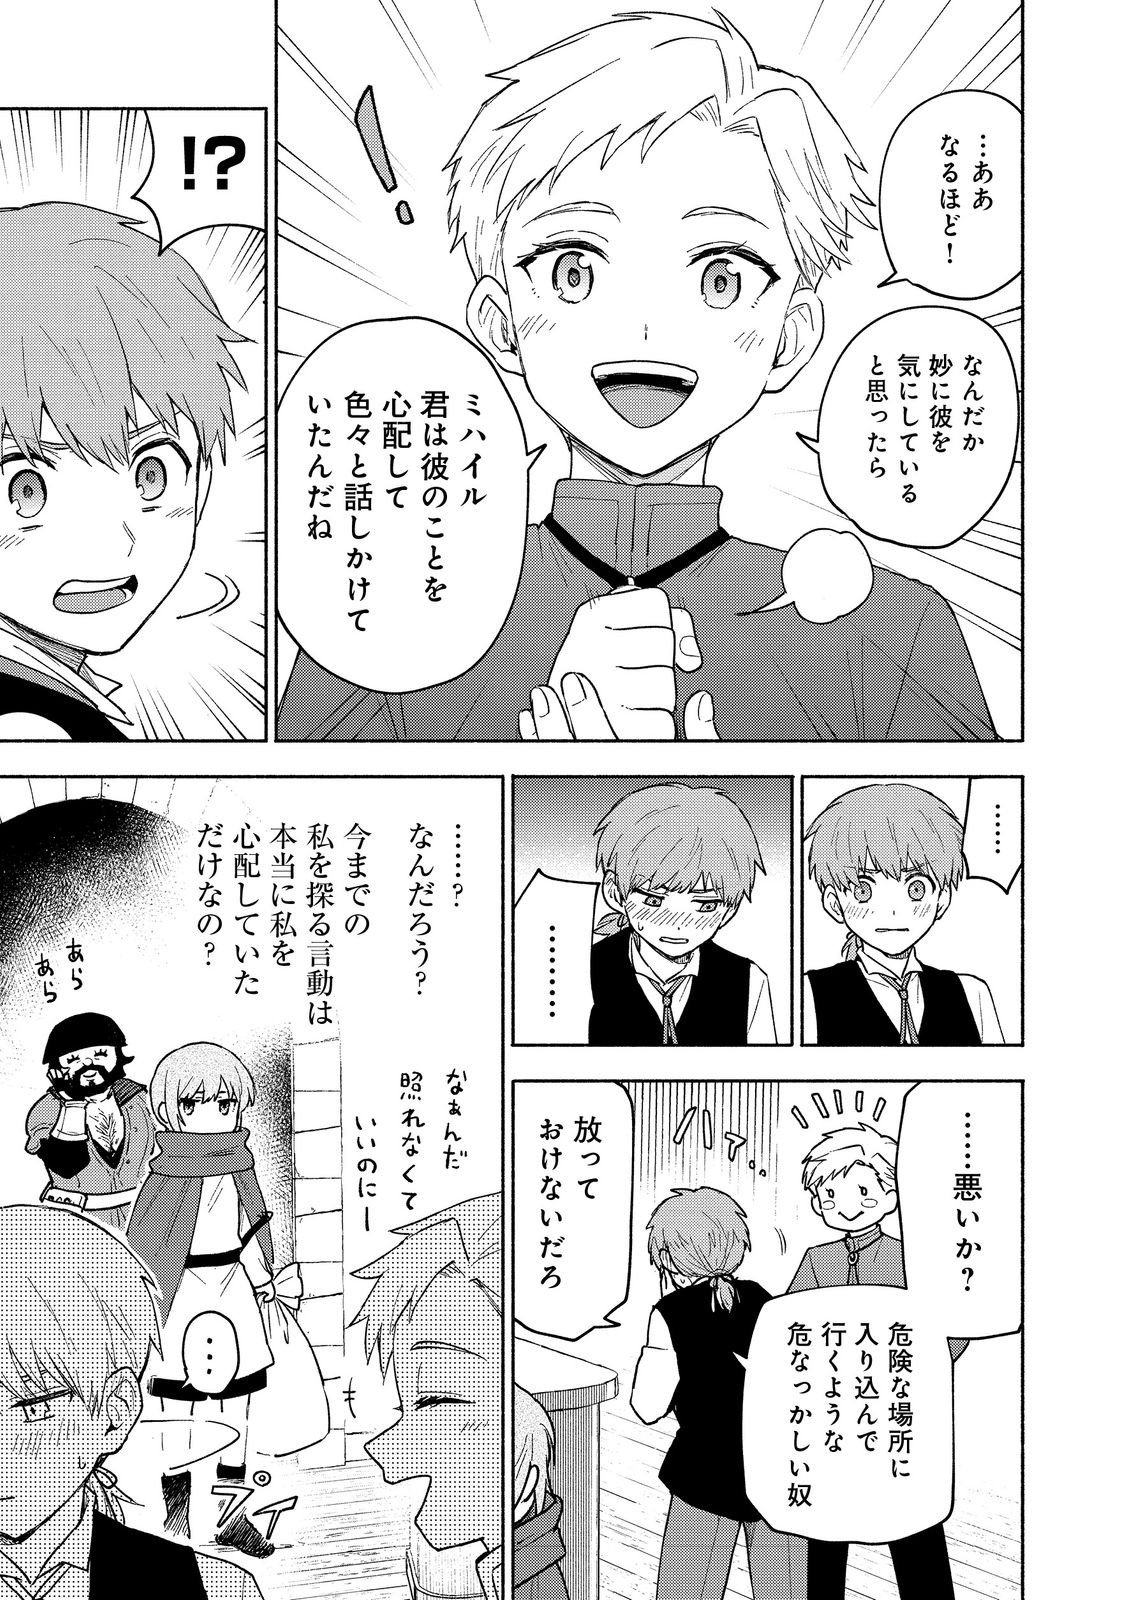 Otome Game no Heroine de Saikyou Survival - Chapter 22 - Page 17